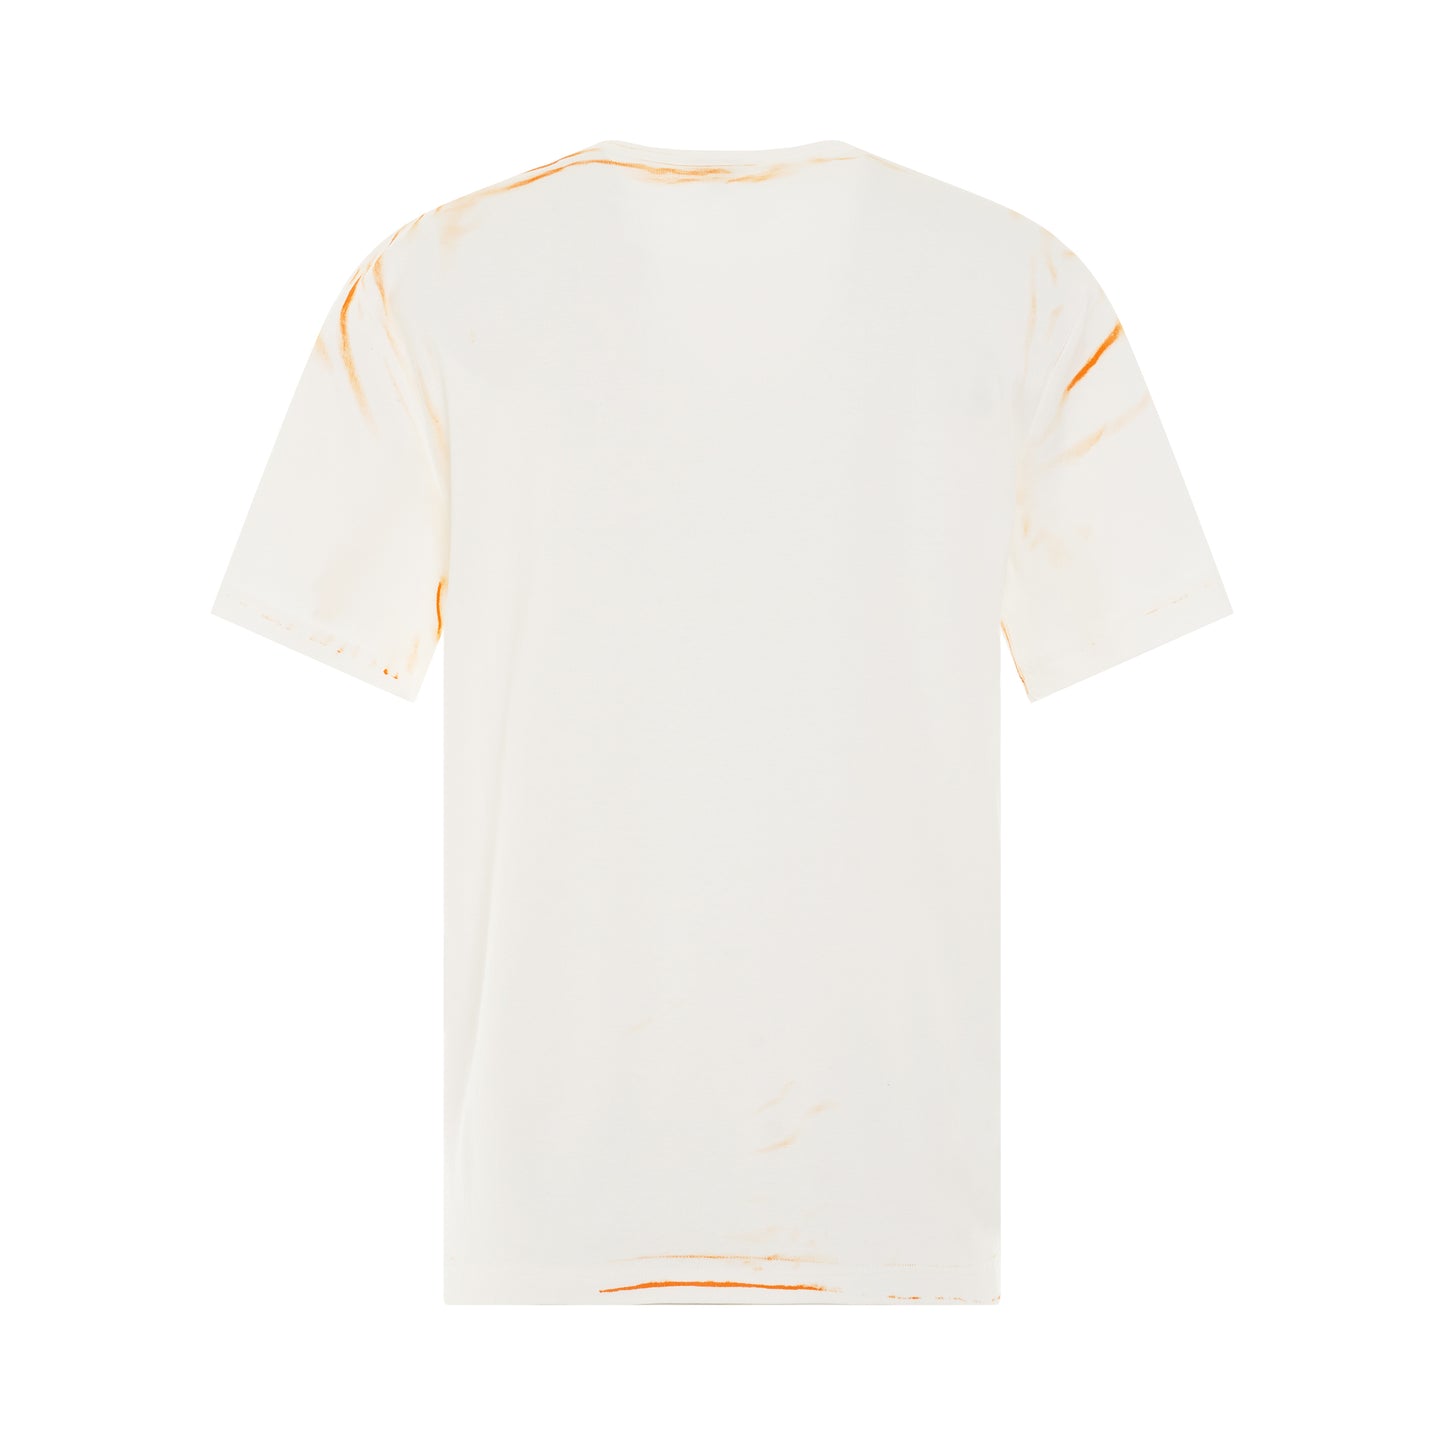 Anagram Print T-Shirt in White/Orange